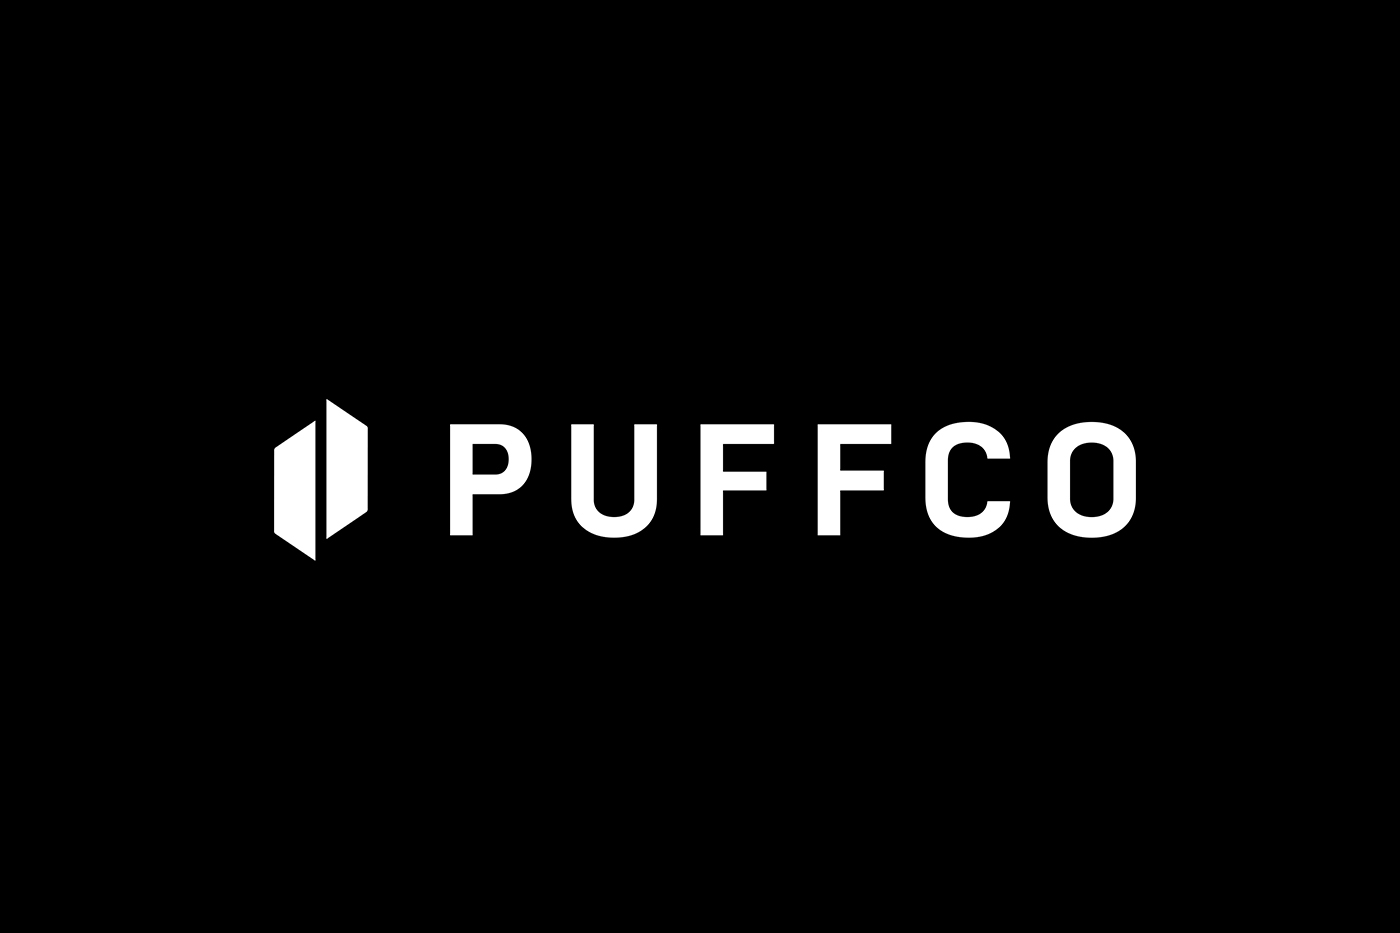 Puffco unveils the $299 Proxy, an innovative, modular cannabis vaporizer